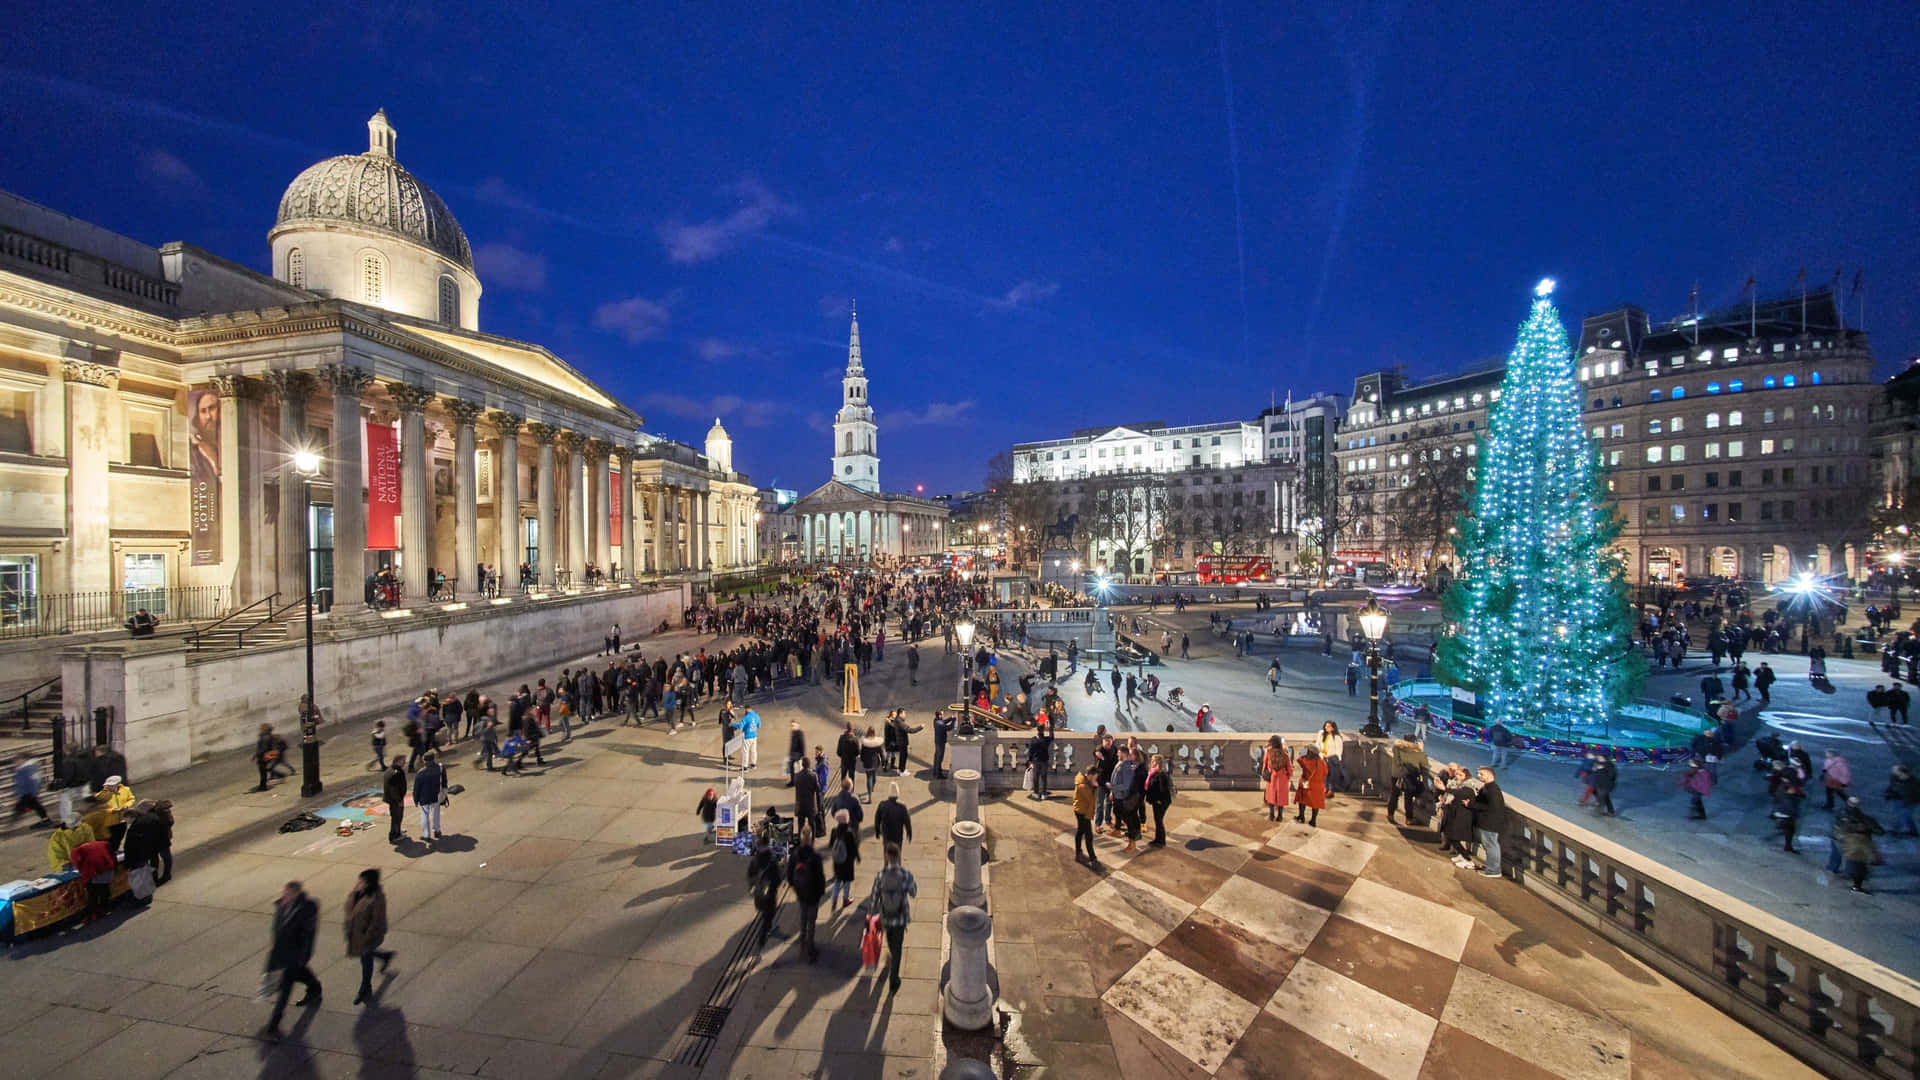 Trafalgar Square Christmas In London Picture